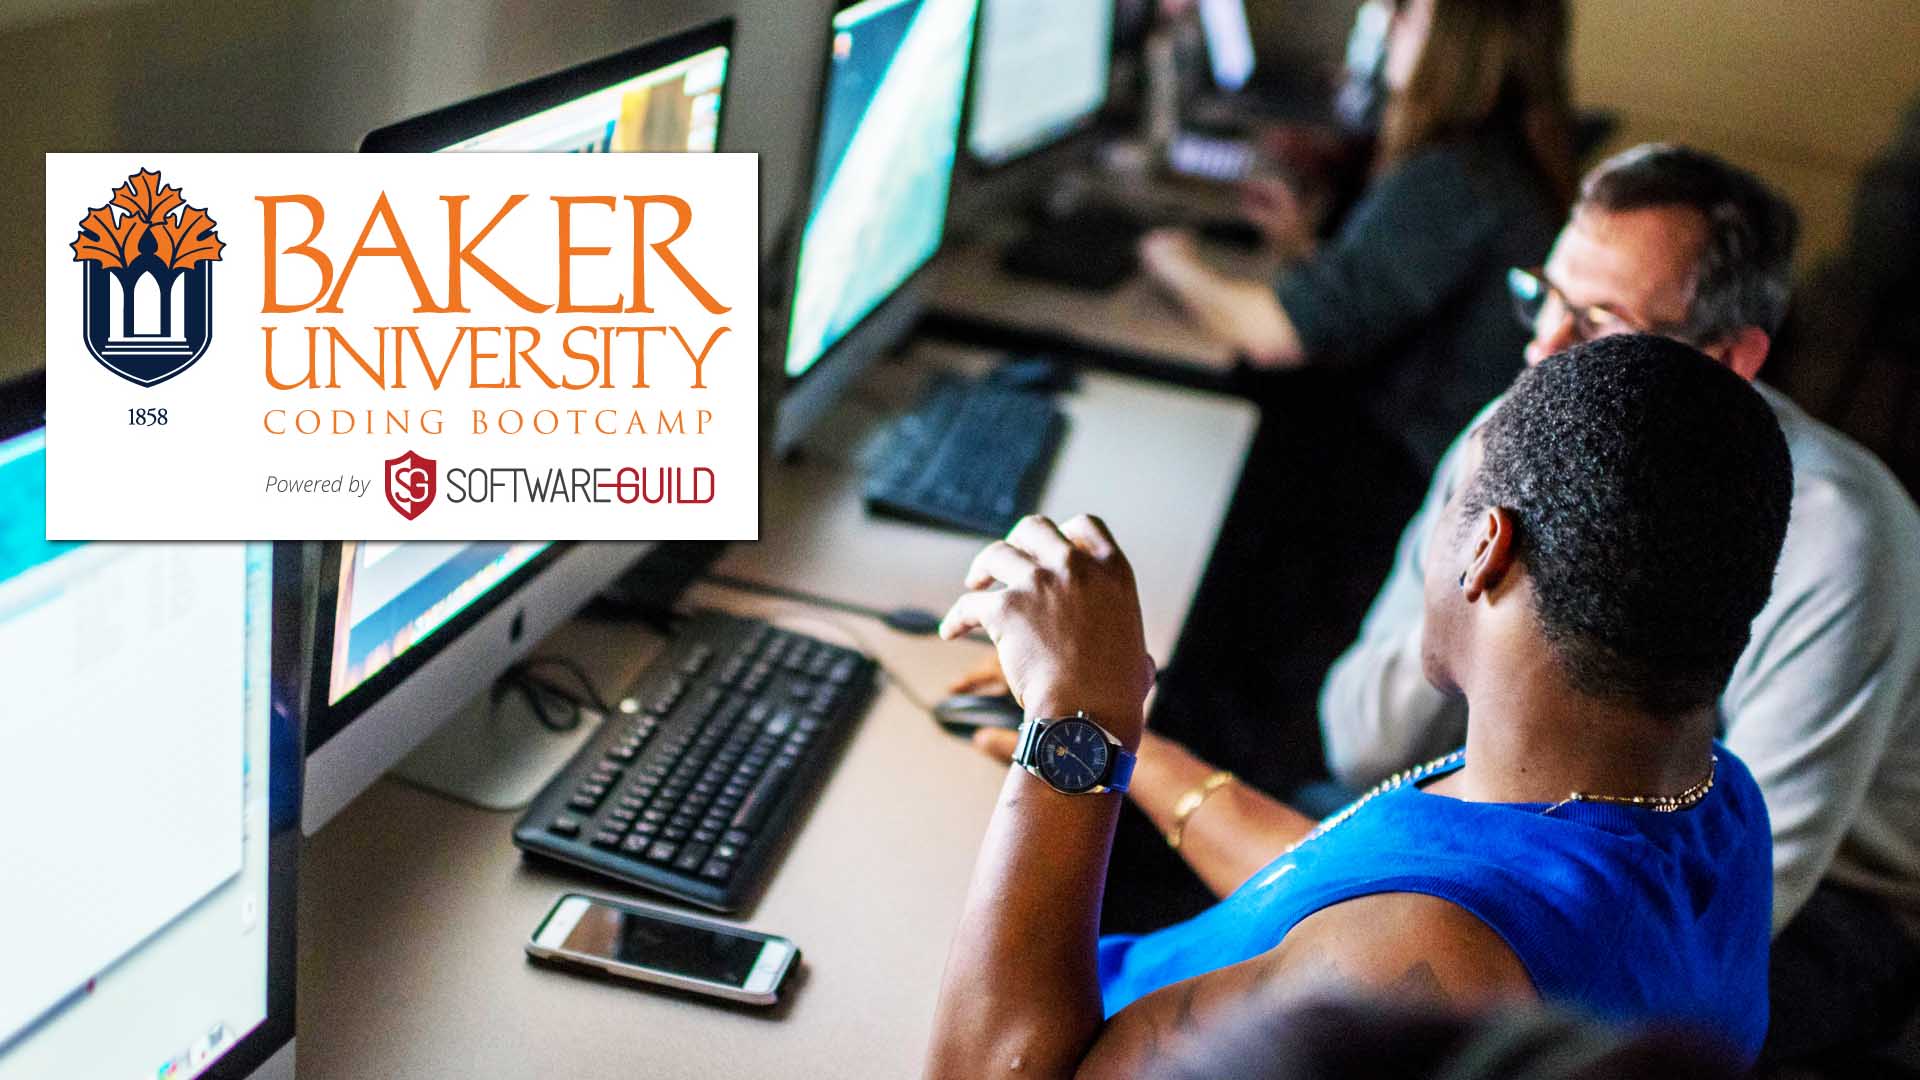 Baker University coding bootcamp graphic